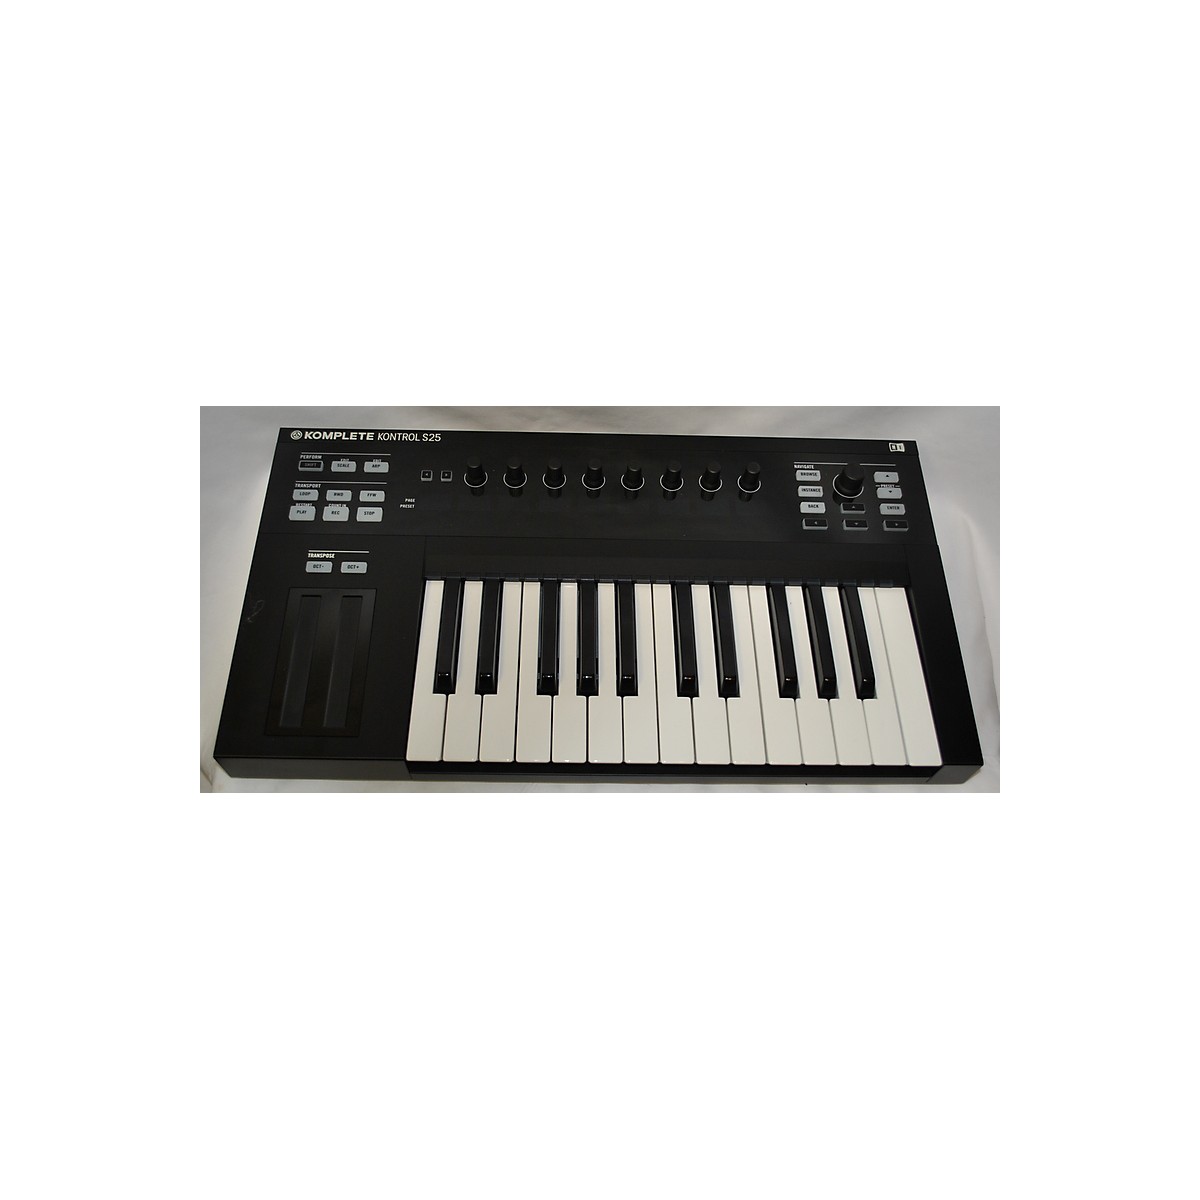 used native instruments komplete kontrol s49 mk2 keyboard